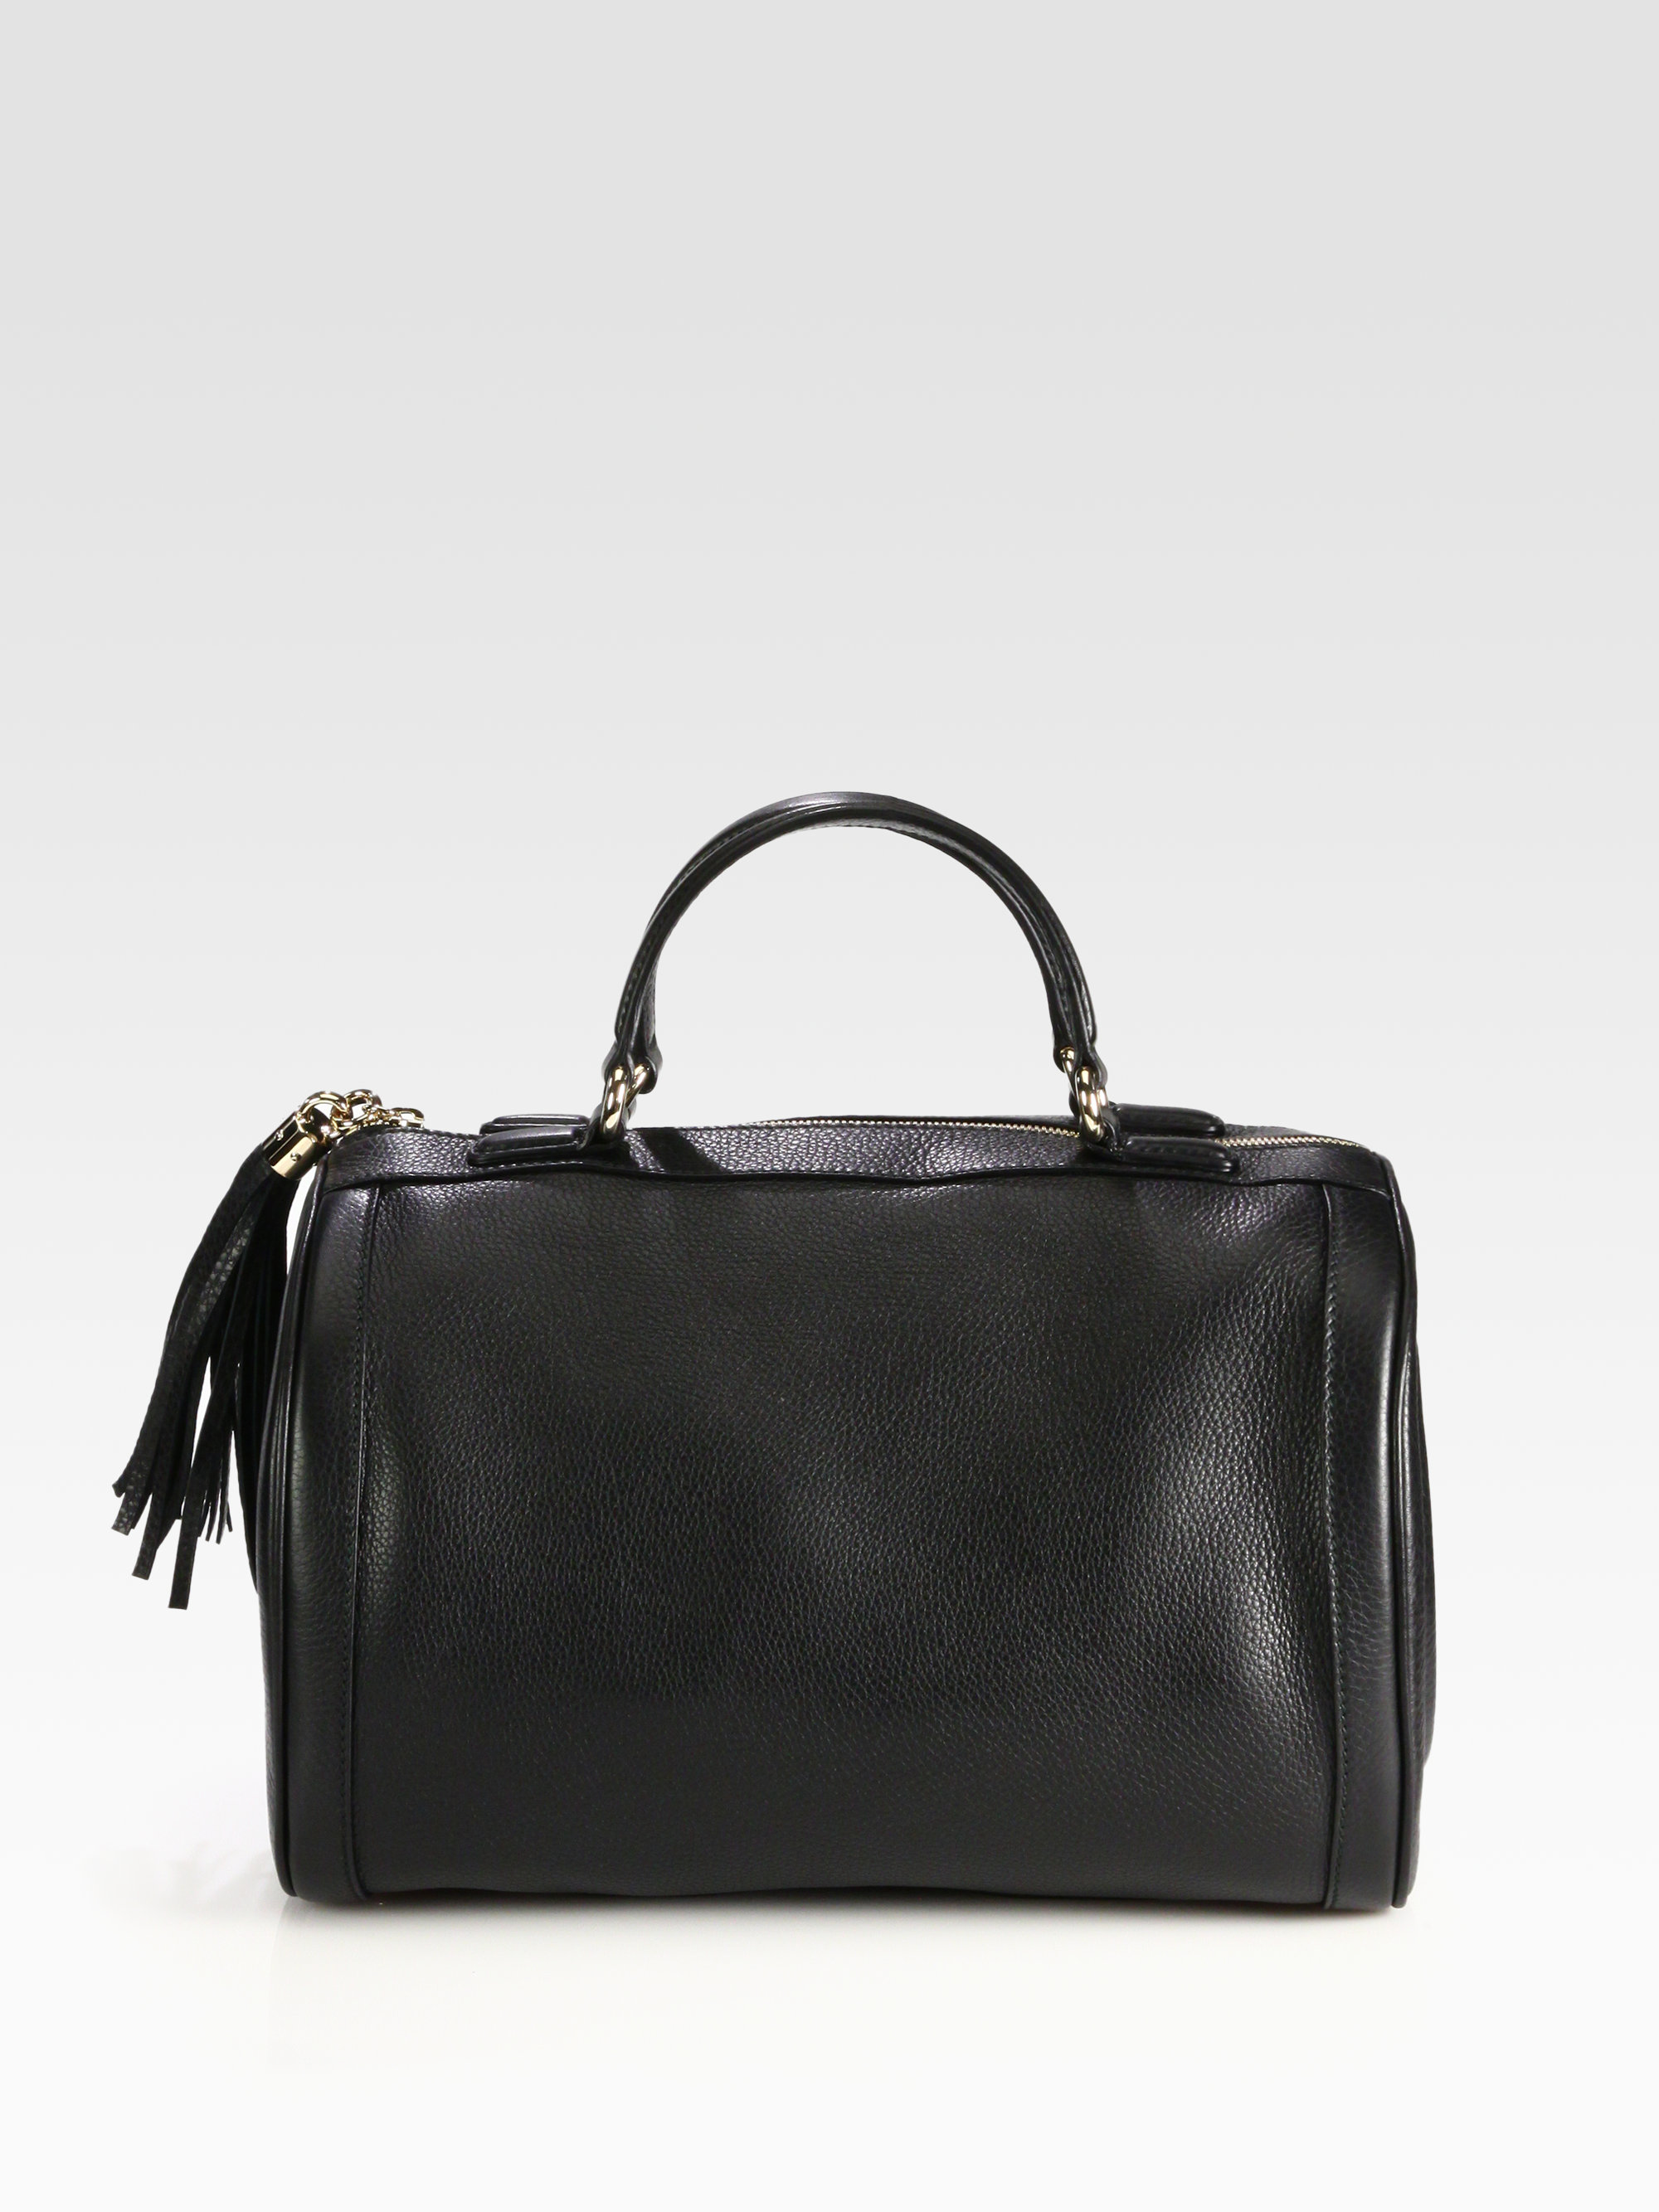 Gucci Soho Leather Boston Bag in Black | Lyst